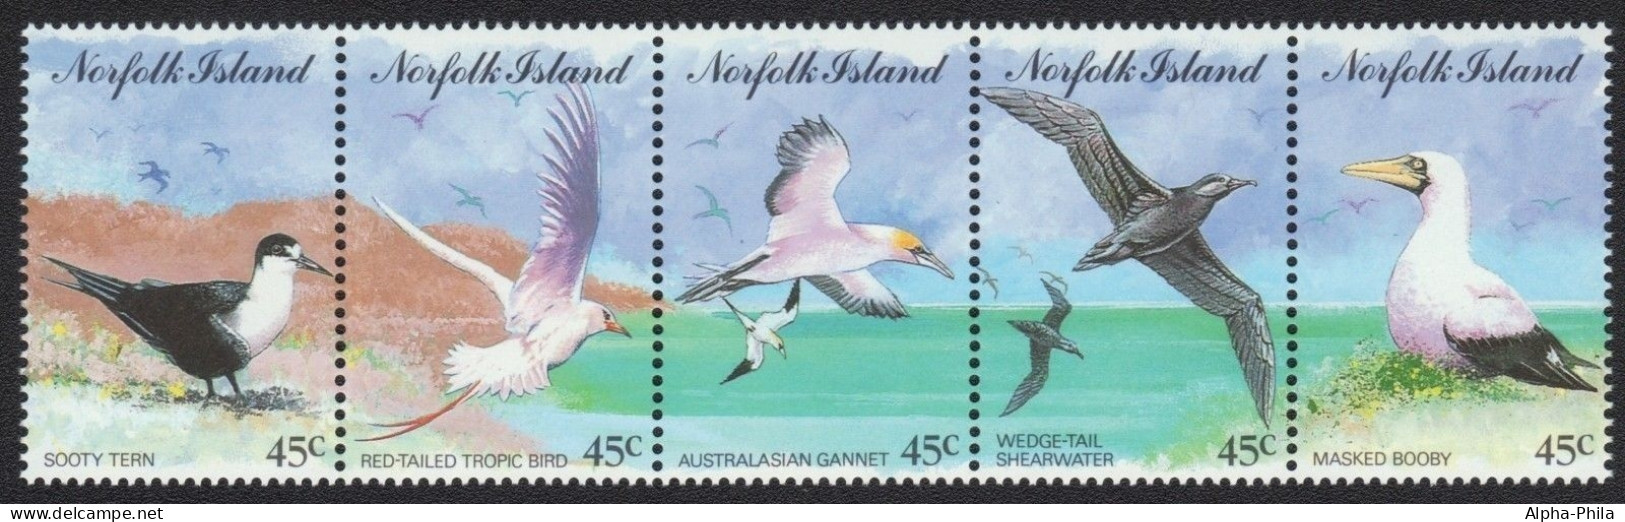 Norfolk-Insel 1994 - Mi-Nr. 569-573 ** - MNH - Streifen - Vögel / Birds - Norfolk Island